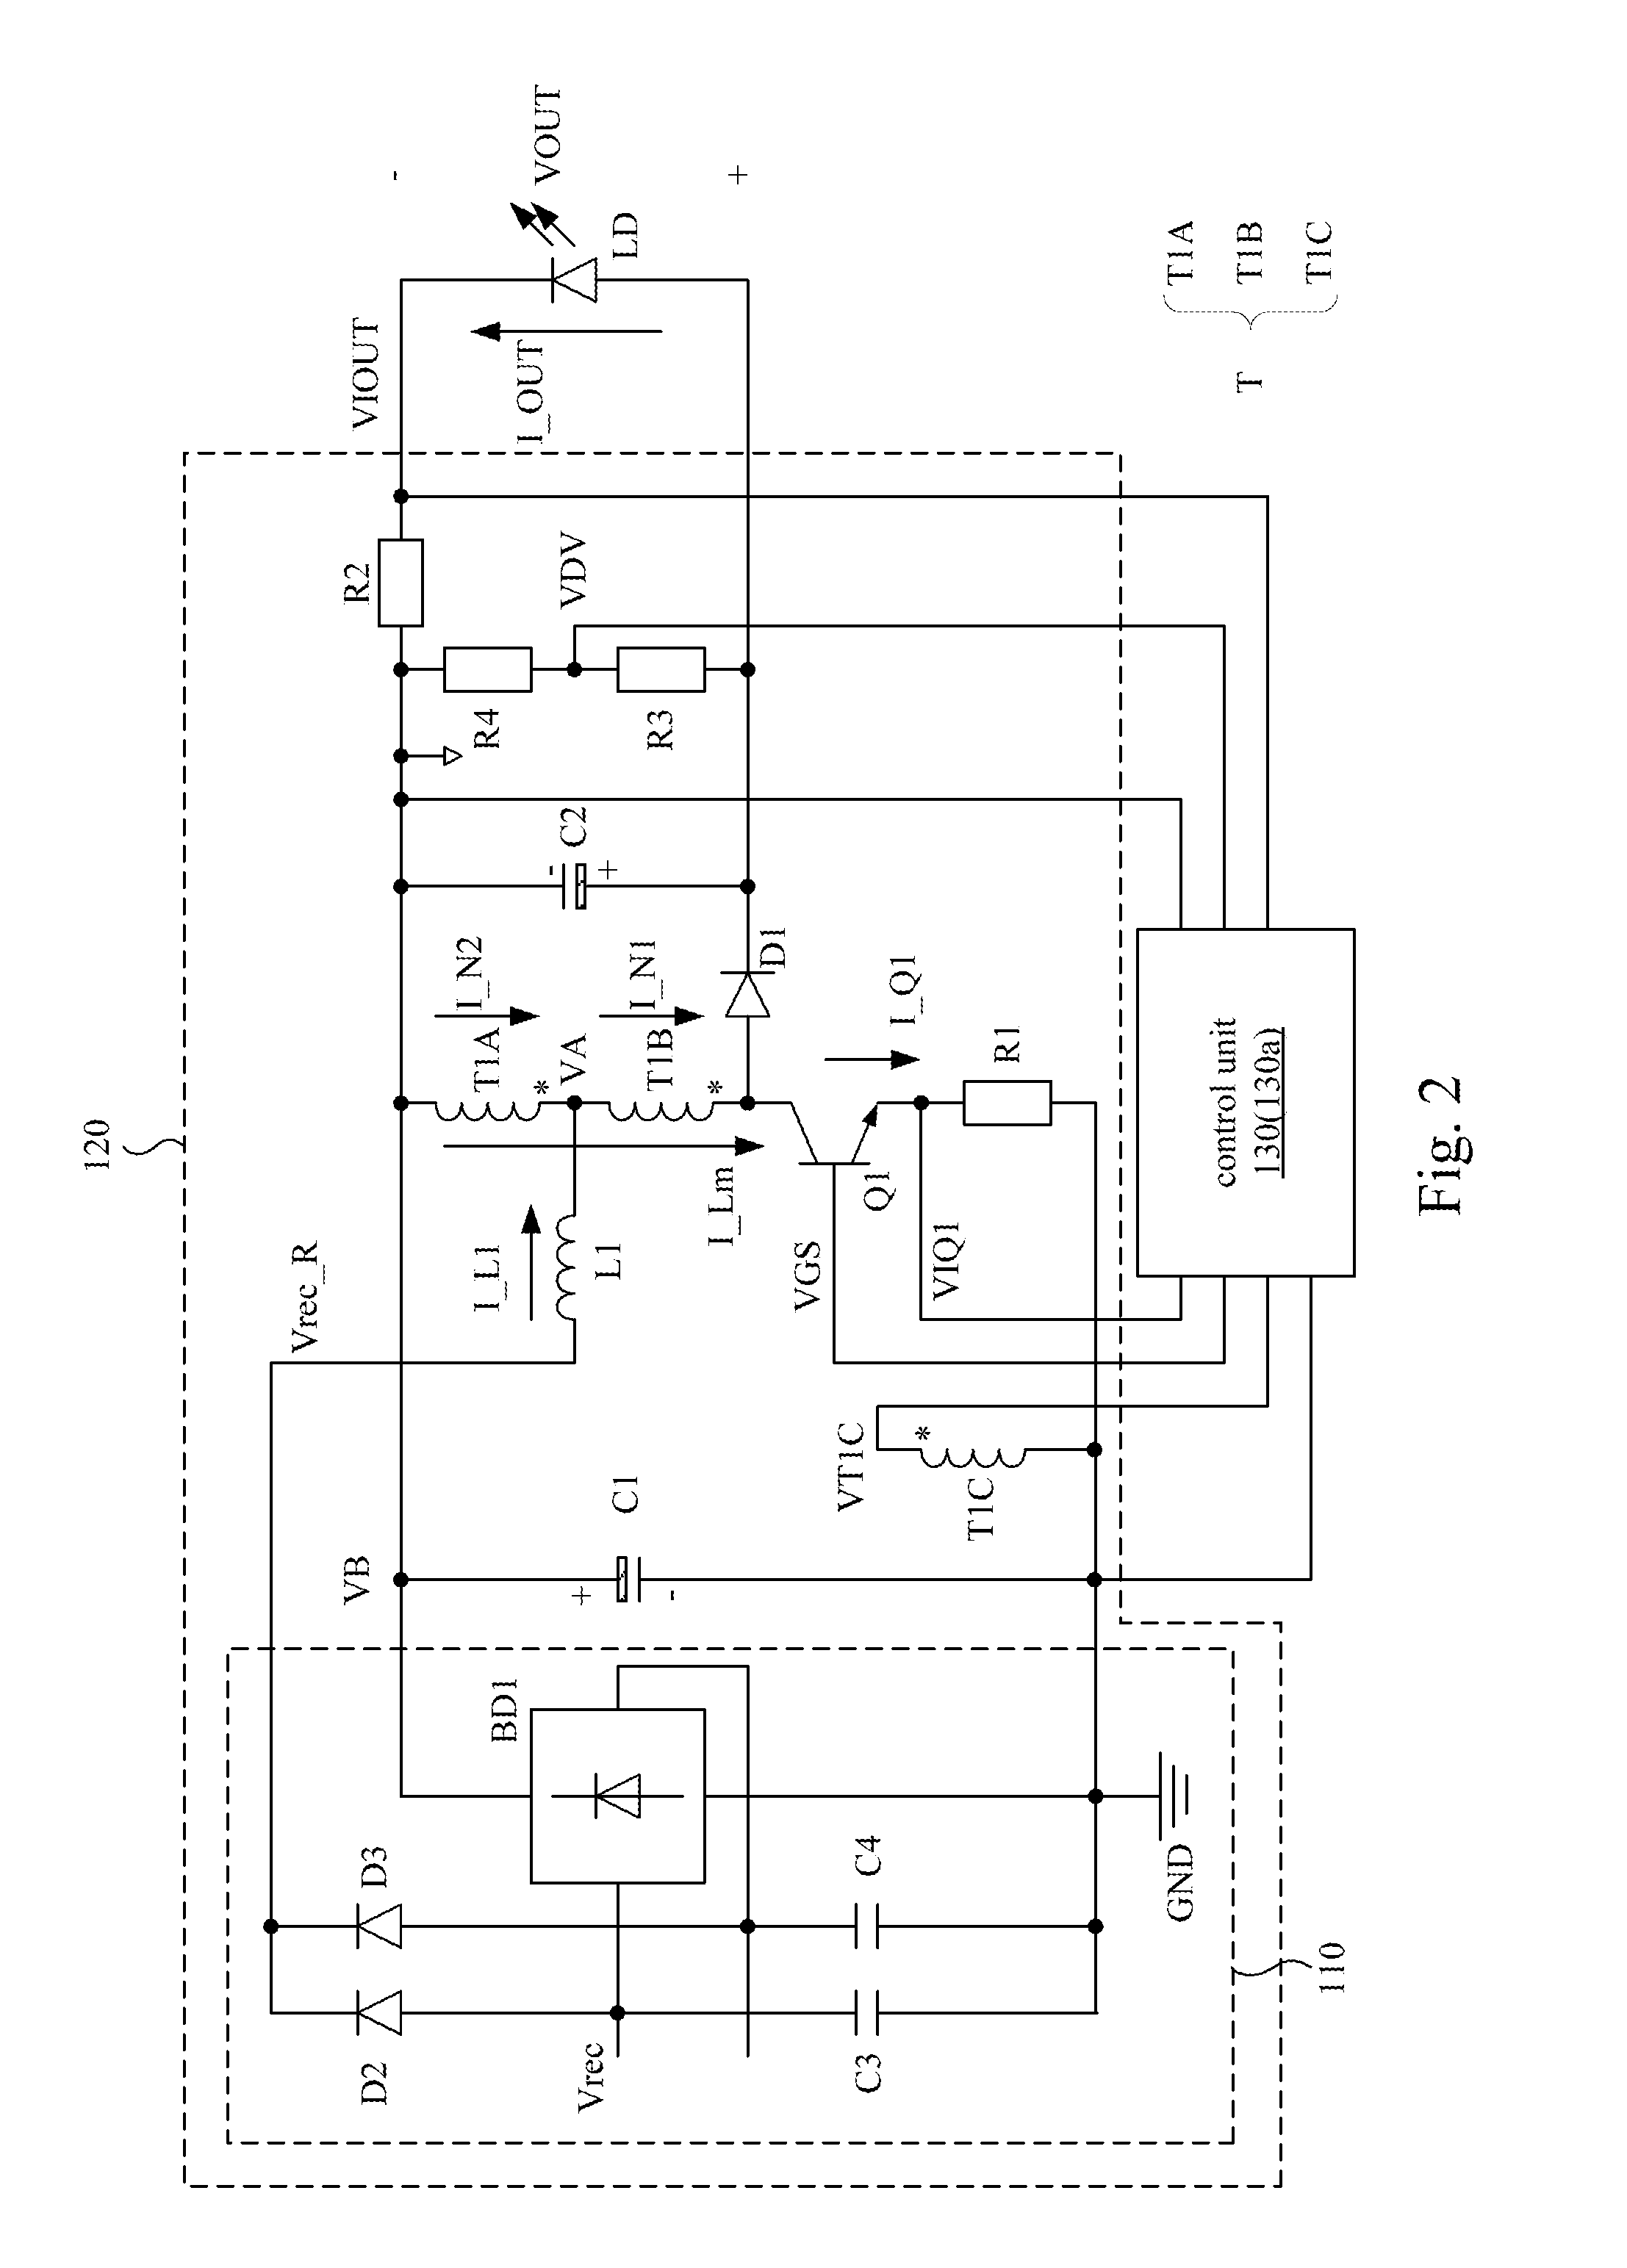 Voltage conversion device